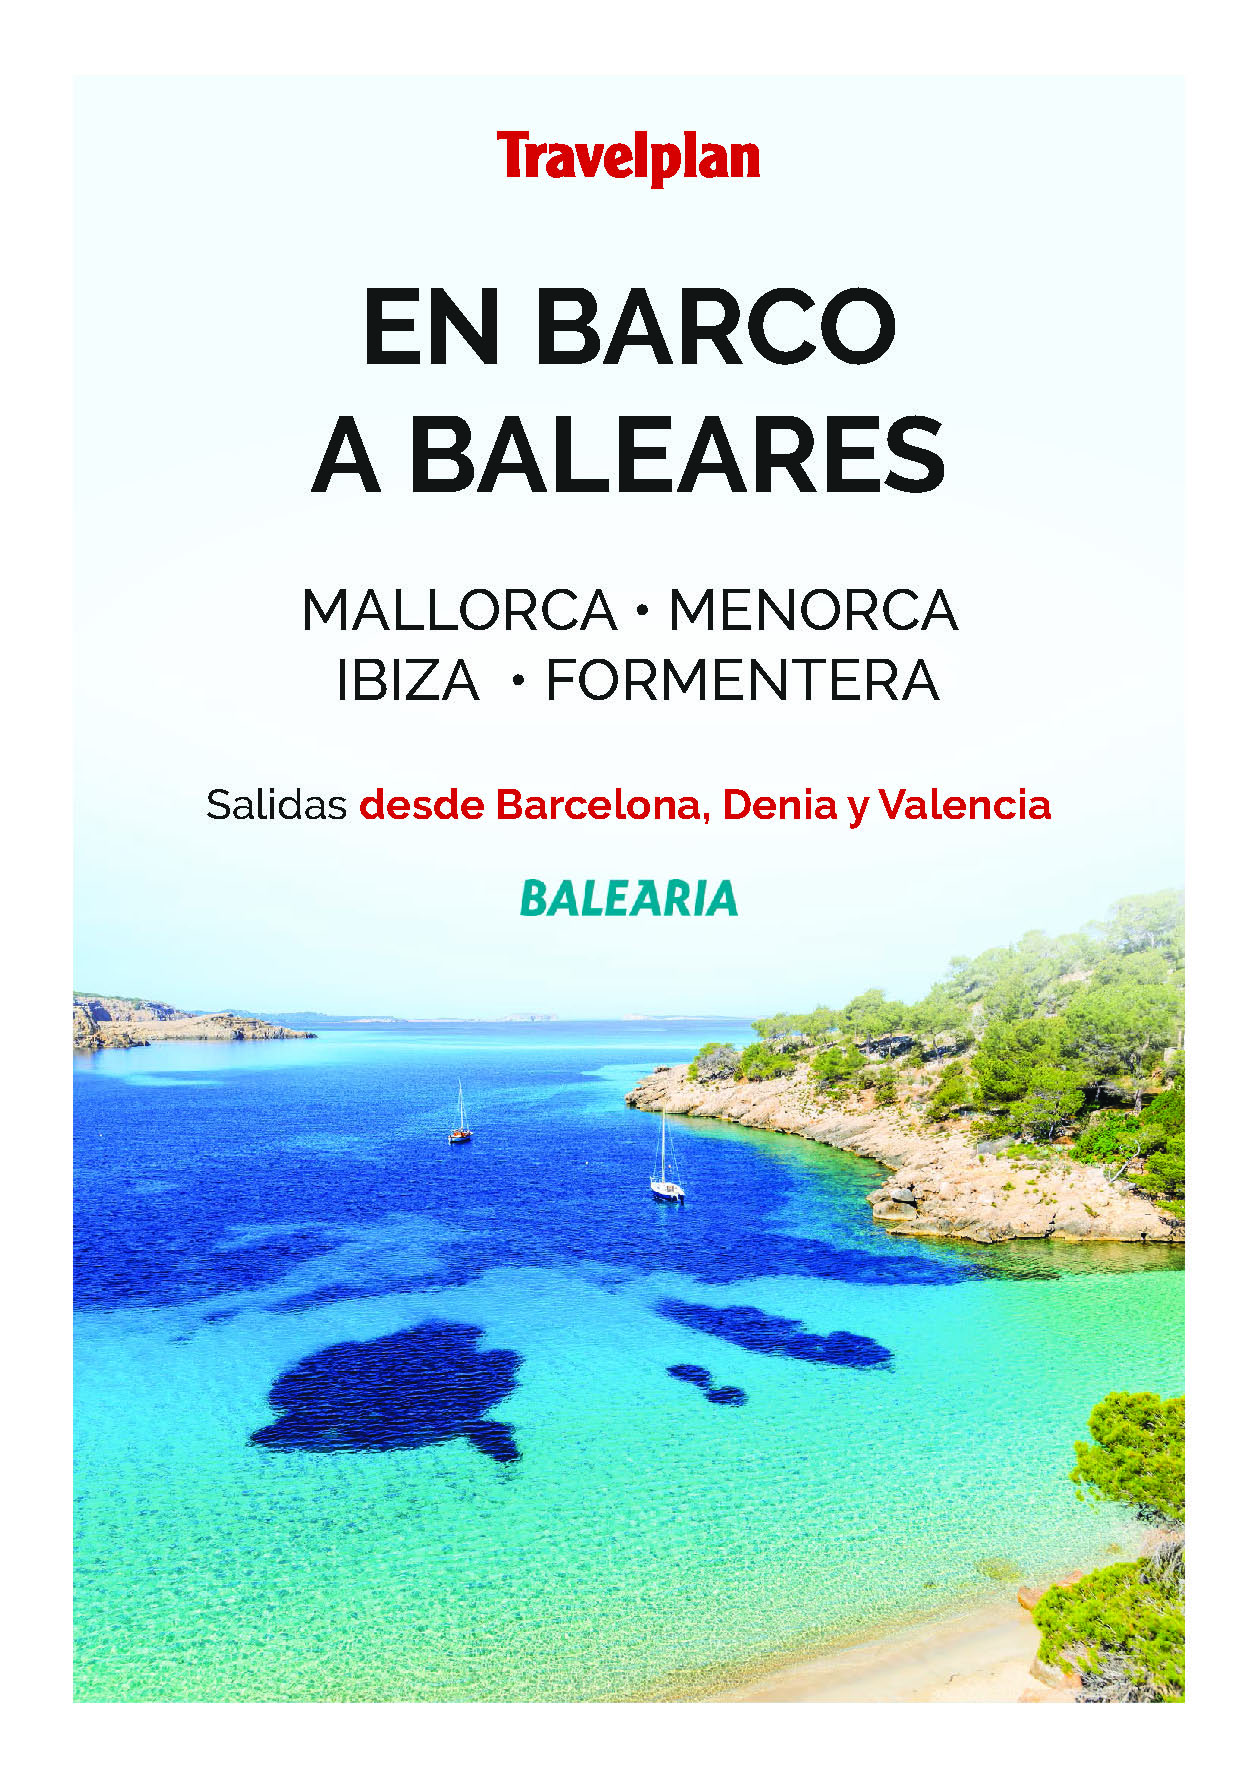 Oferta Travelplan Baleares en Barco Verano 2022 salidas desde Barcelona Valencia y Denia